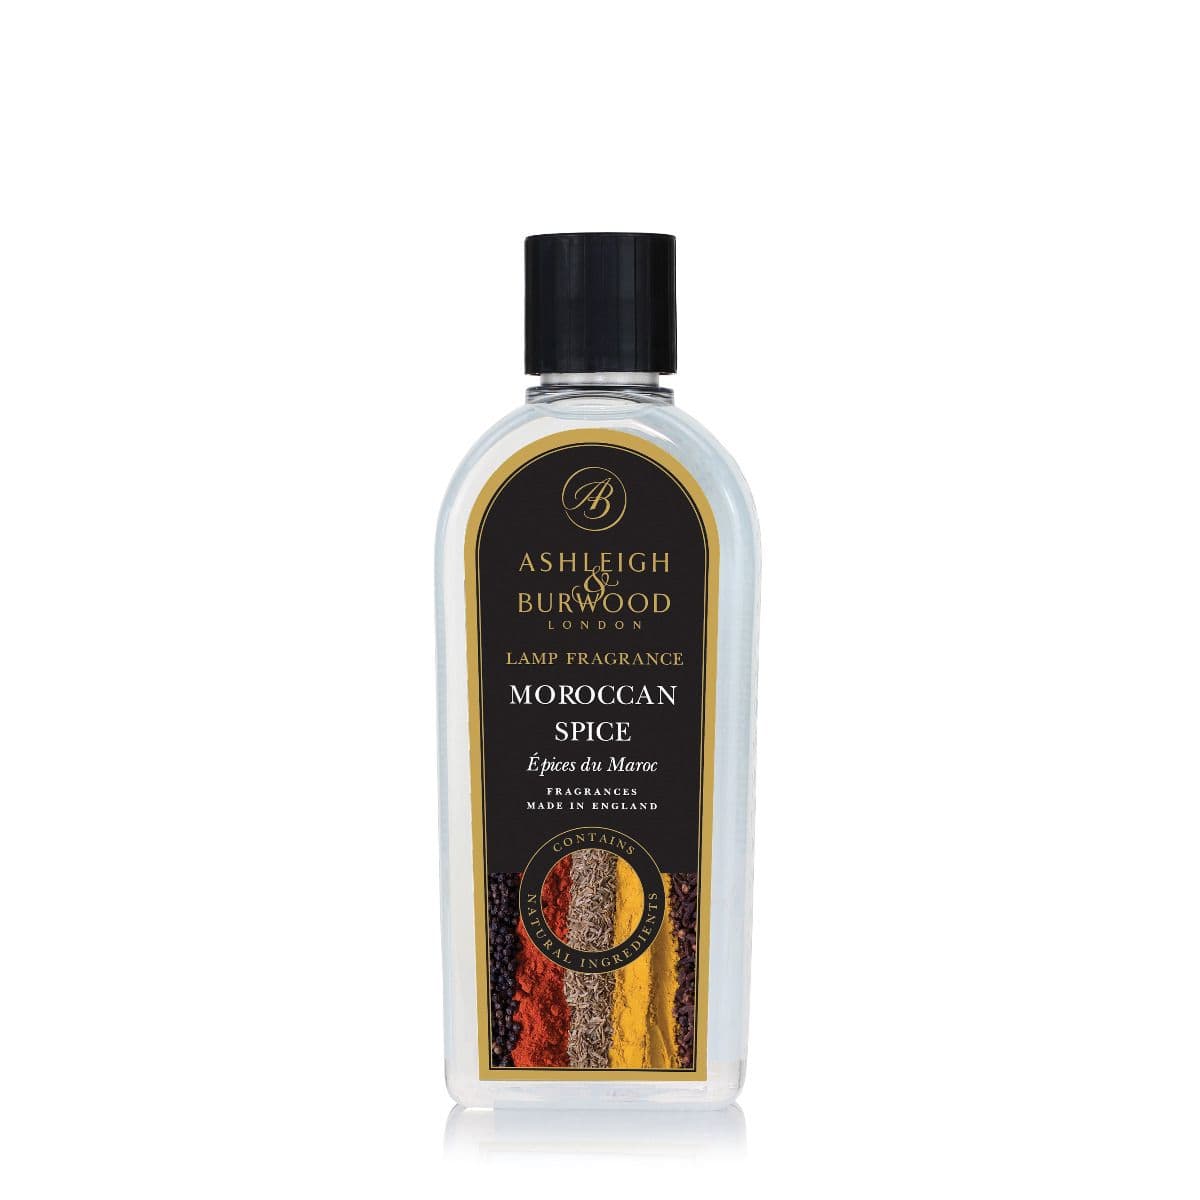 Ashleigh & Burwood Lamp Fragrance Oil 500ml Ashleigh & Burwood Lamp Fragrance - Moroccan Spice 500ml